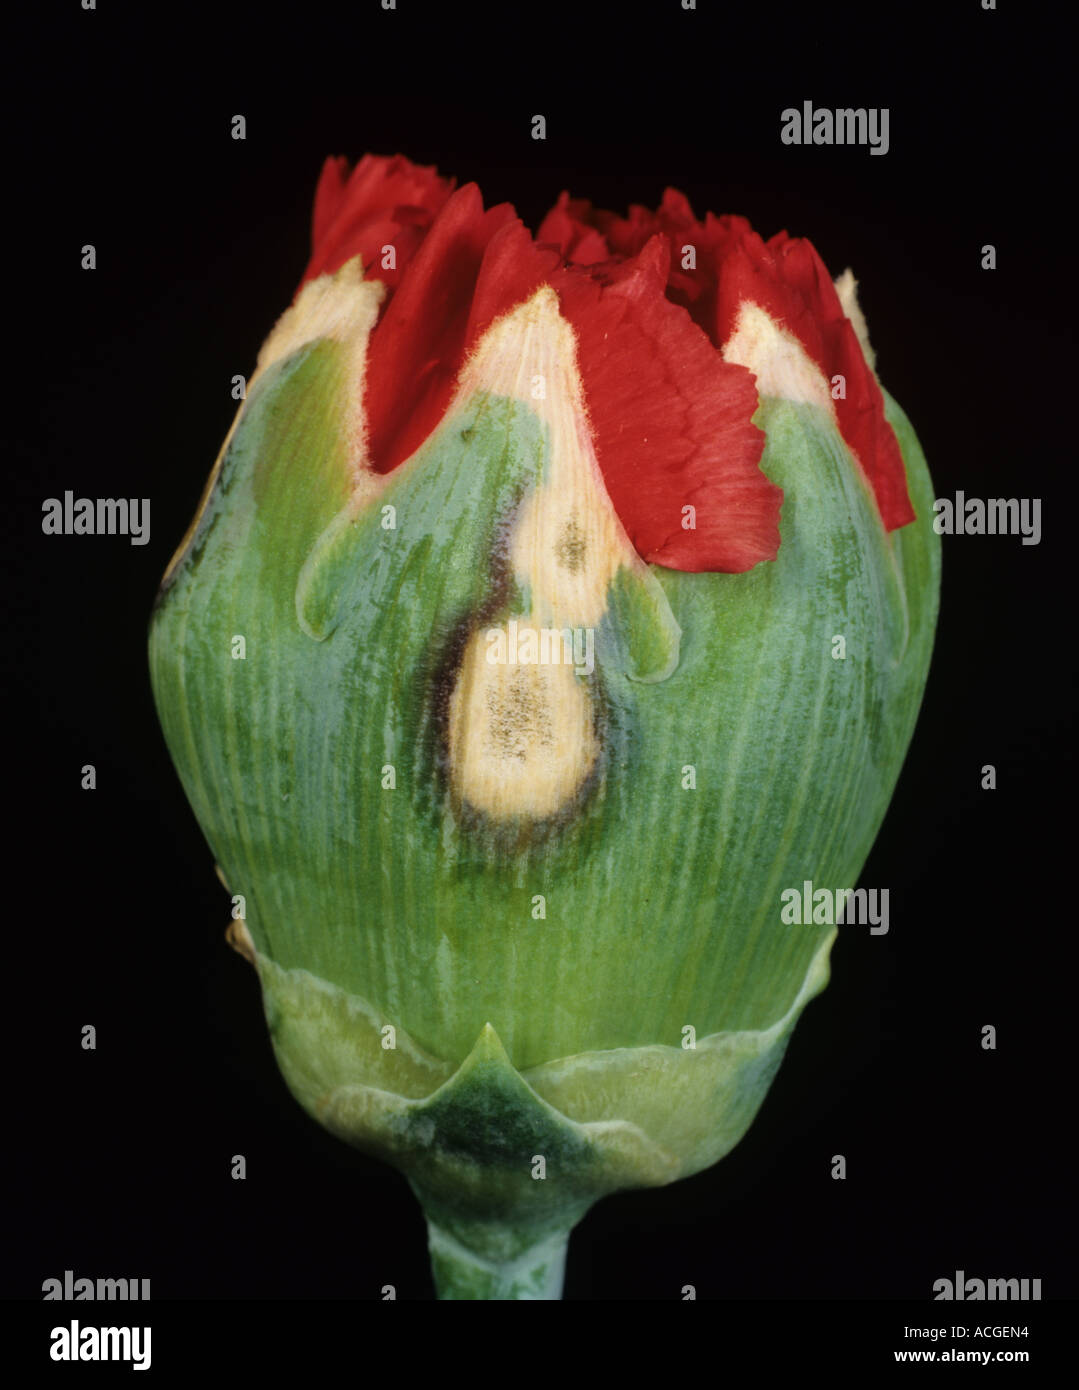 Heterosporium schinollatum lesion on a carnation flower bud Stock Photo